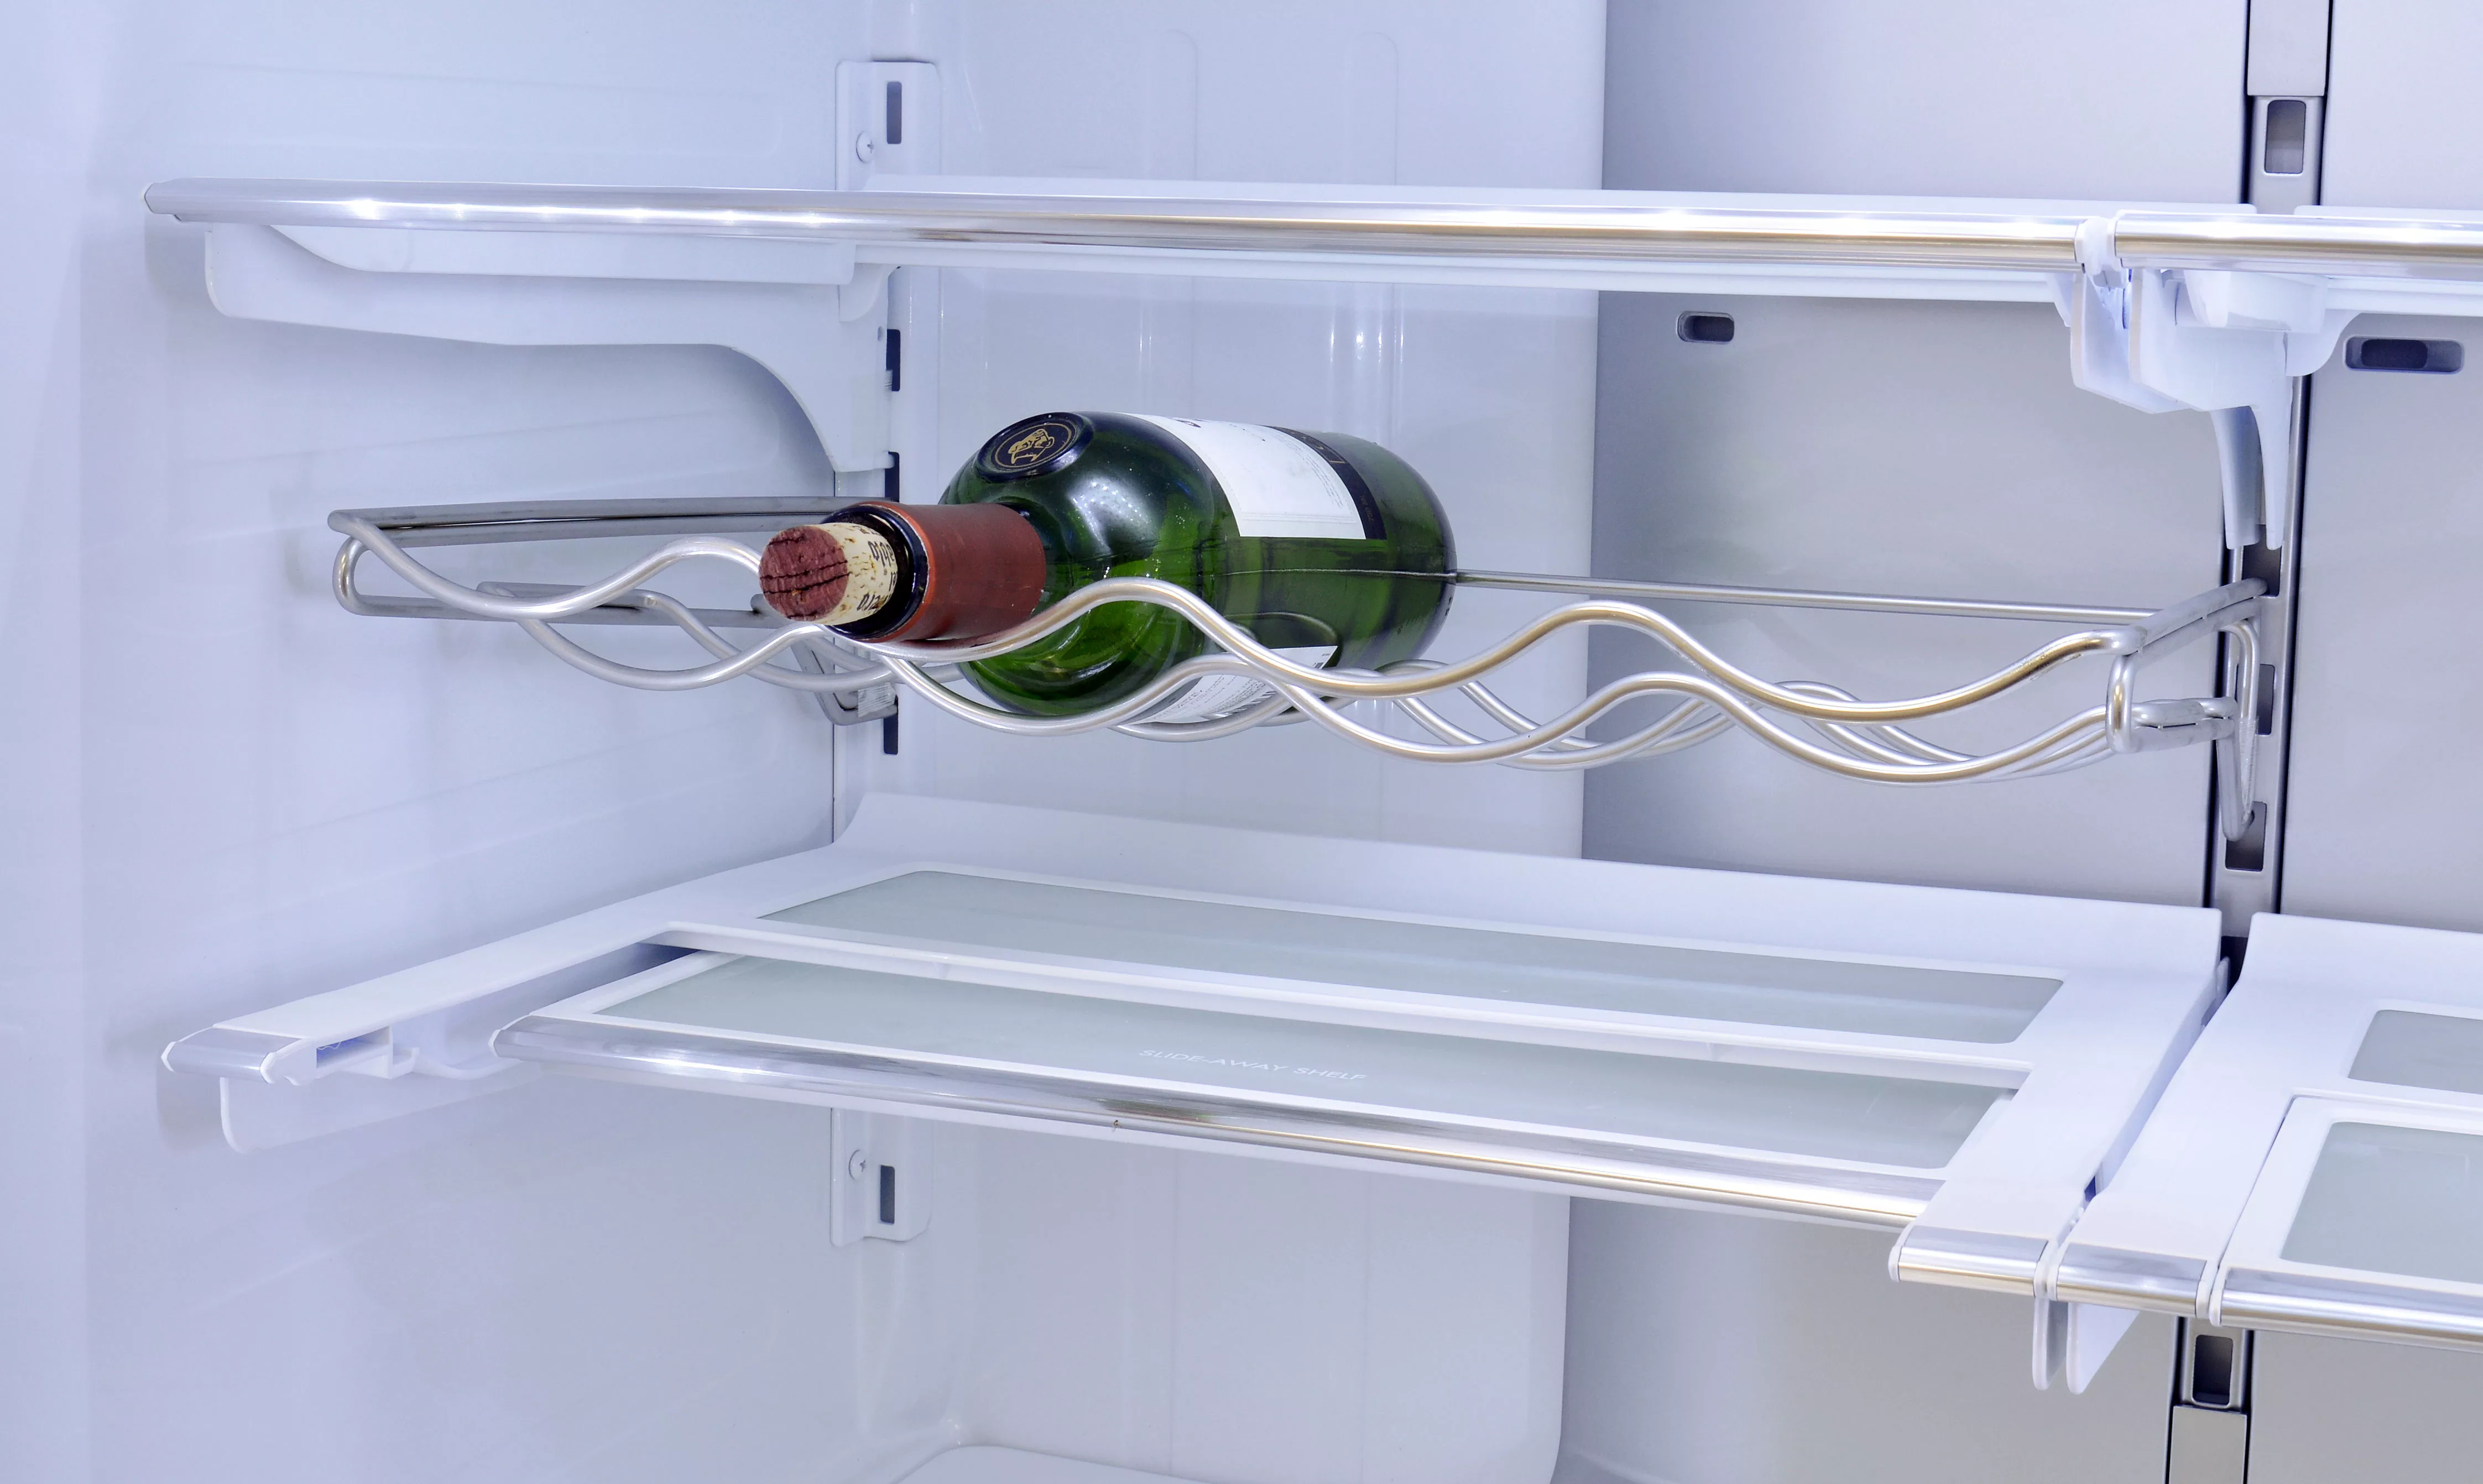 12 Best Wine Rack For Refrigerator For 2023